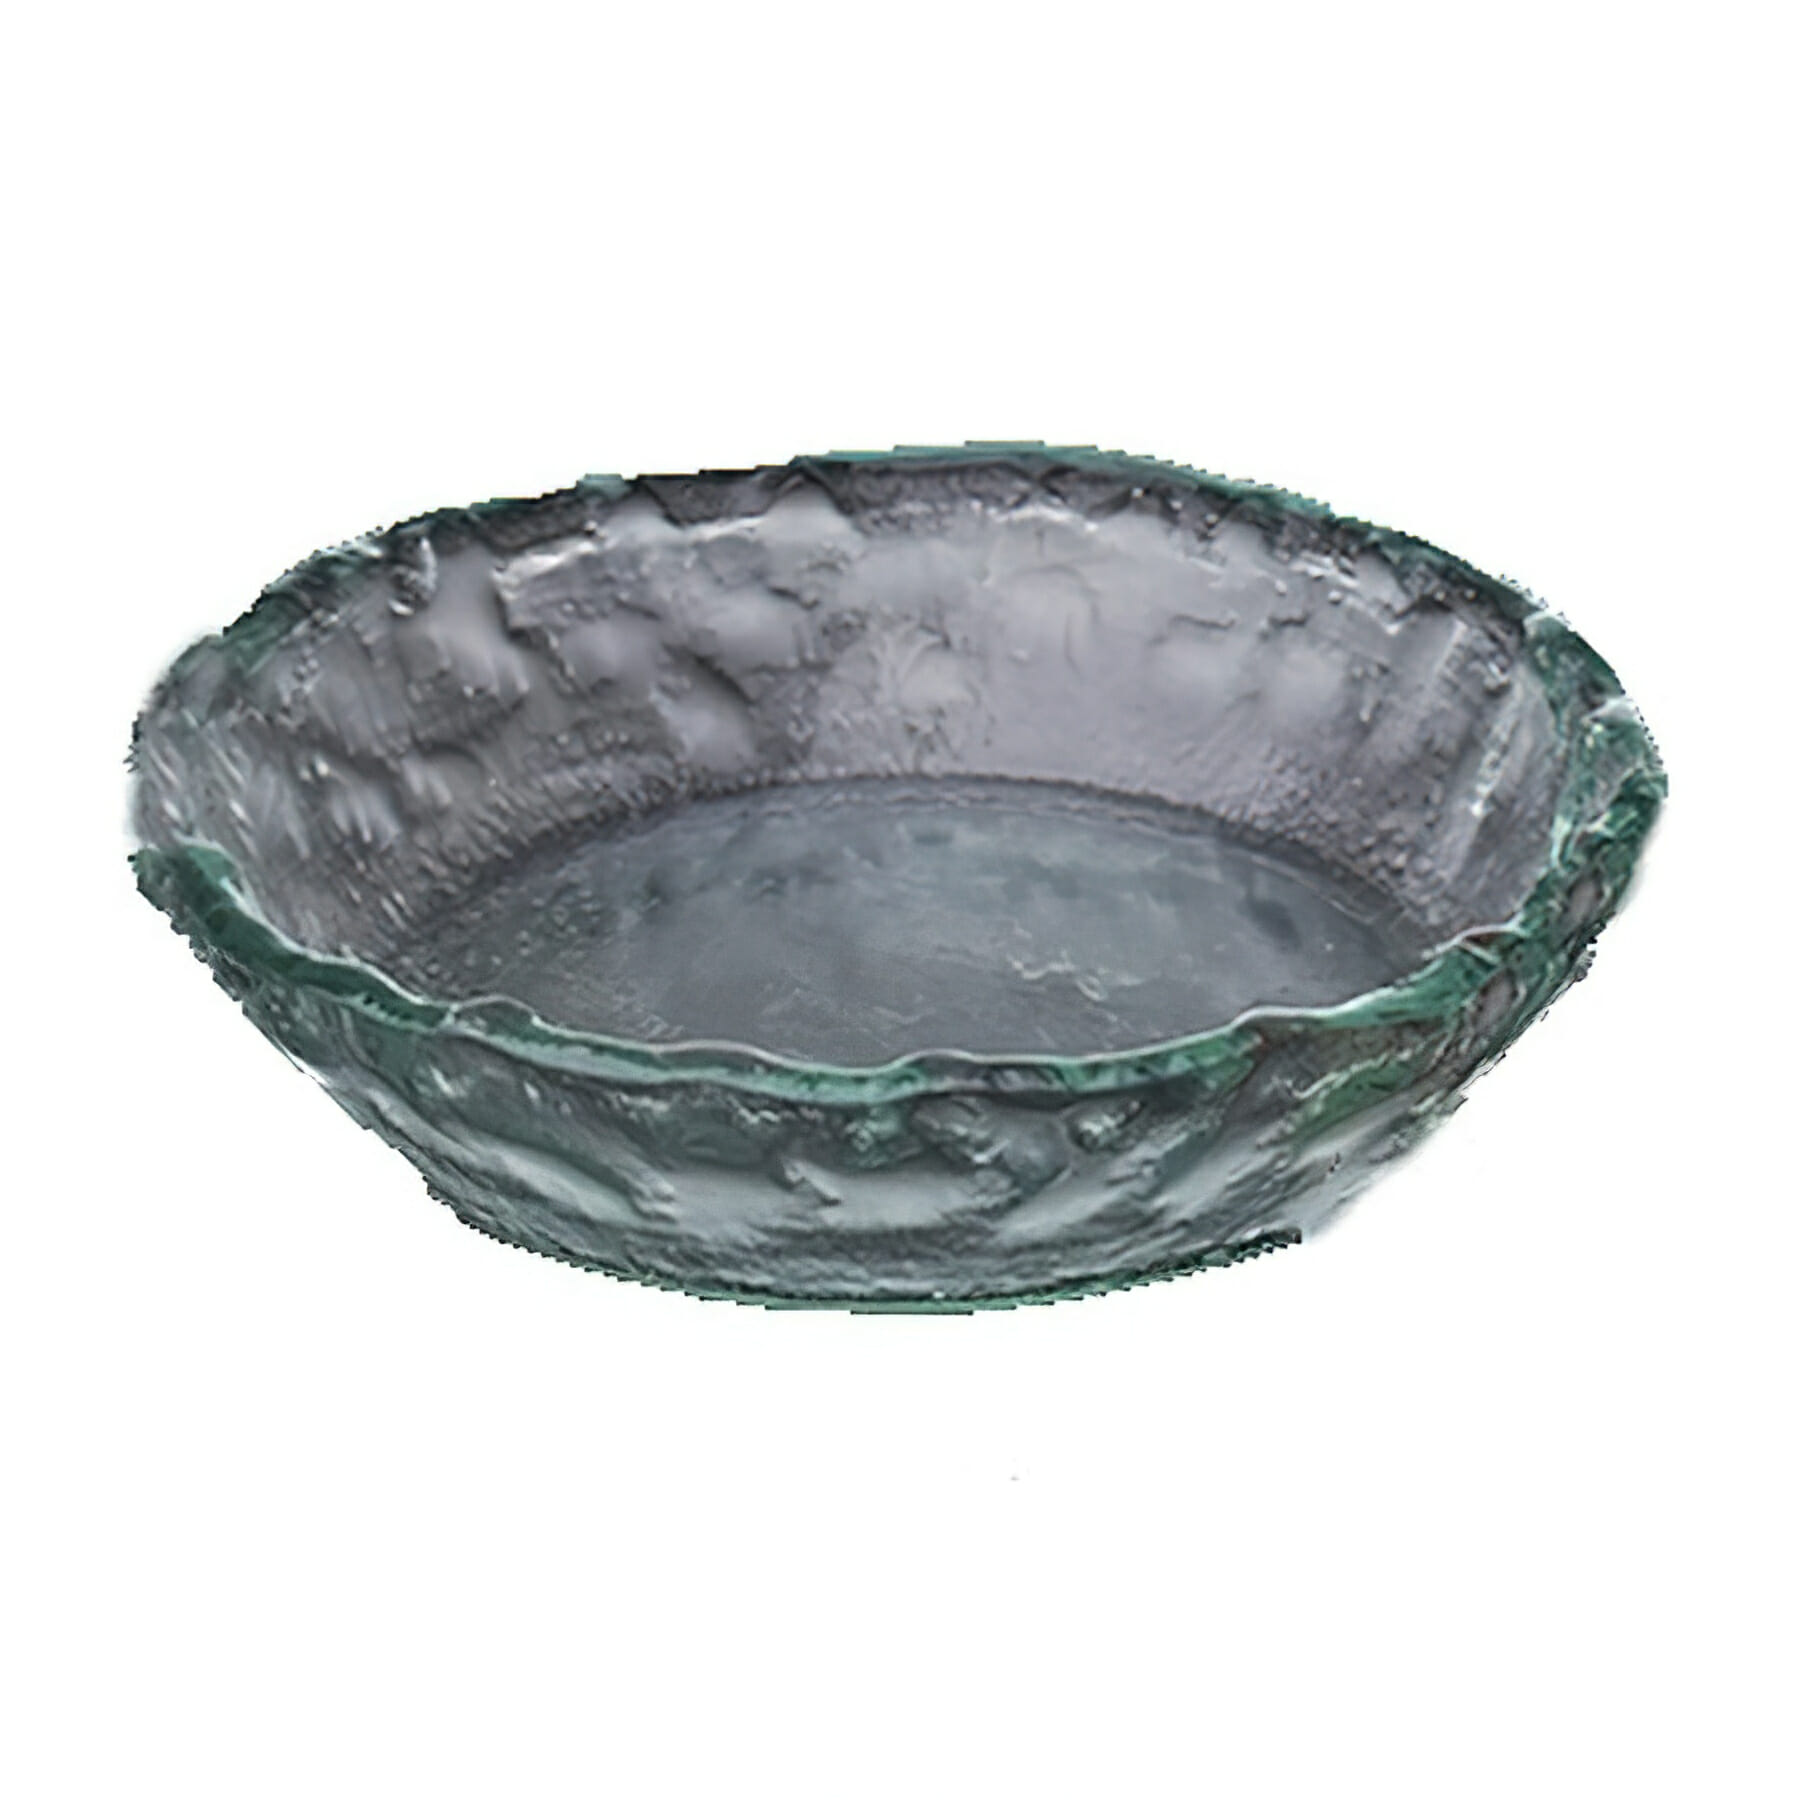 8" Jade Glass Bowl, 2" deep